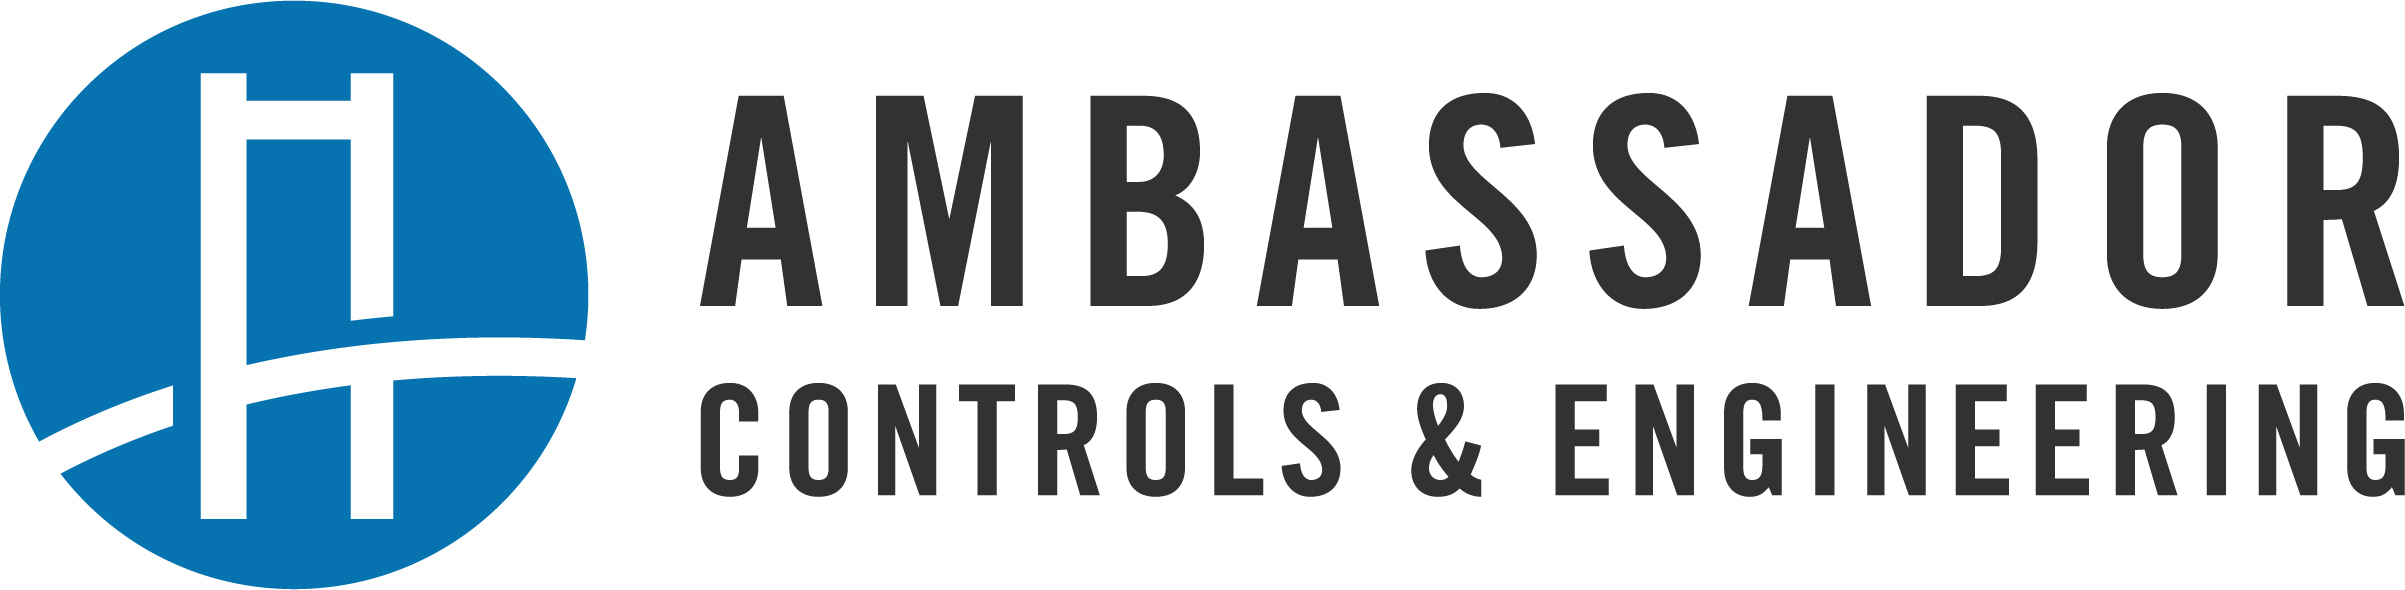 Ambassador Controls and Engineering